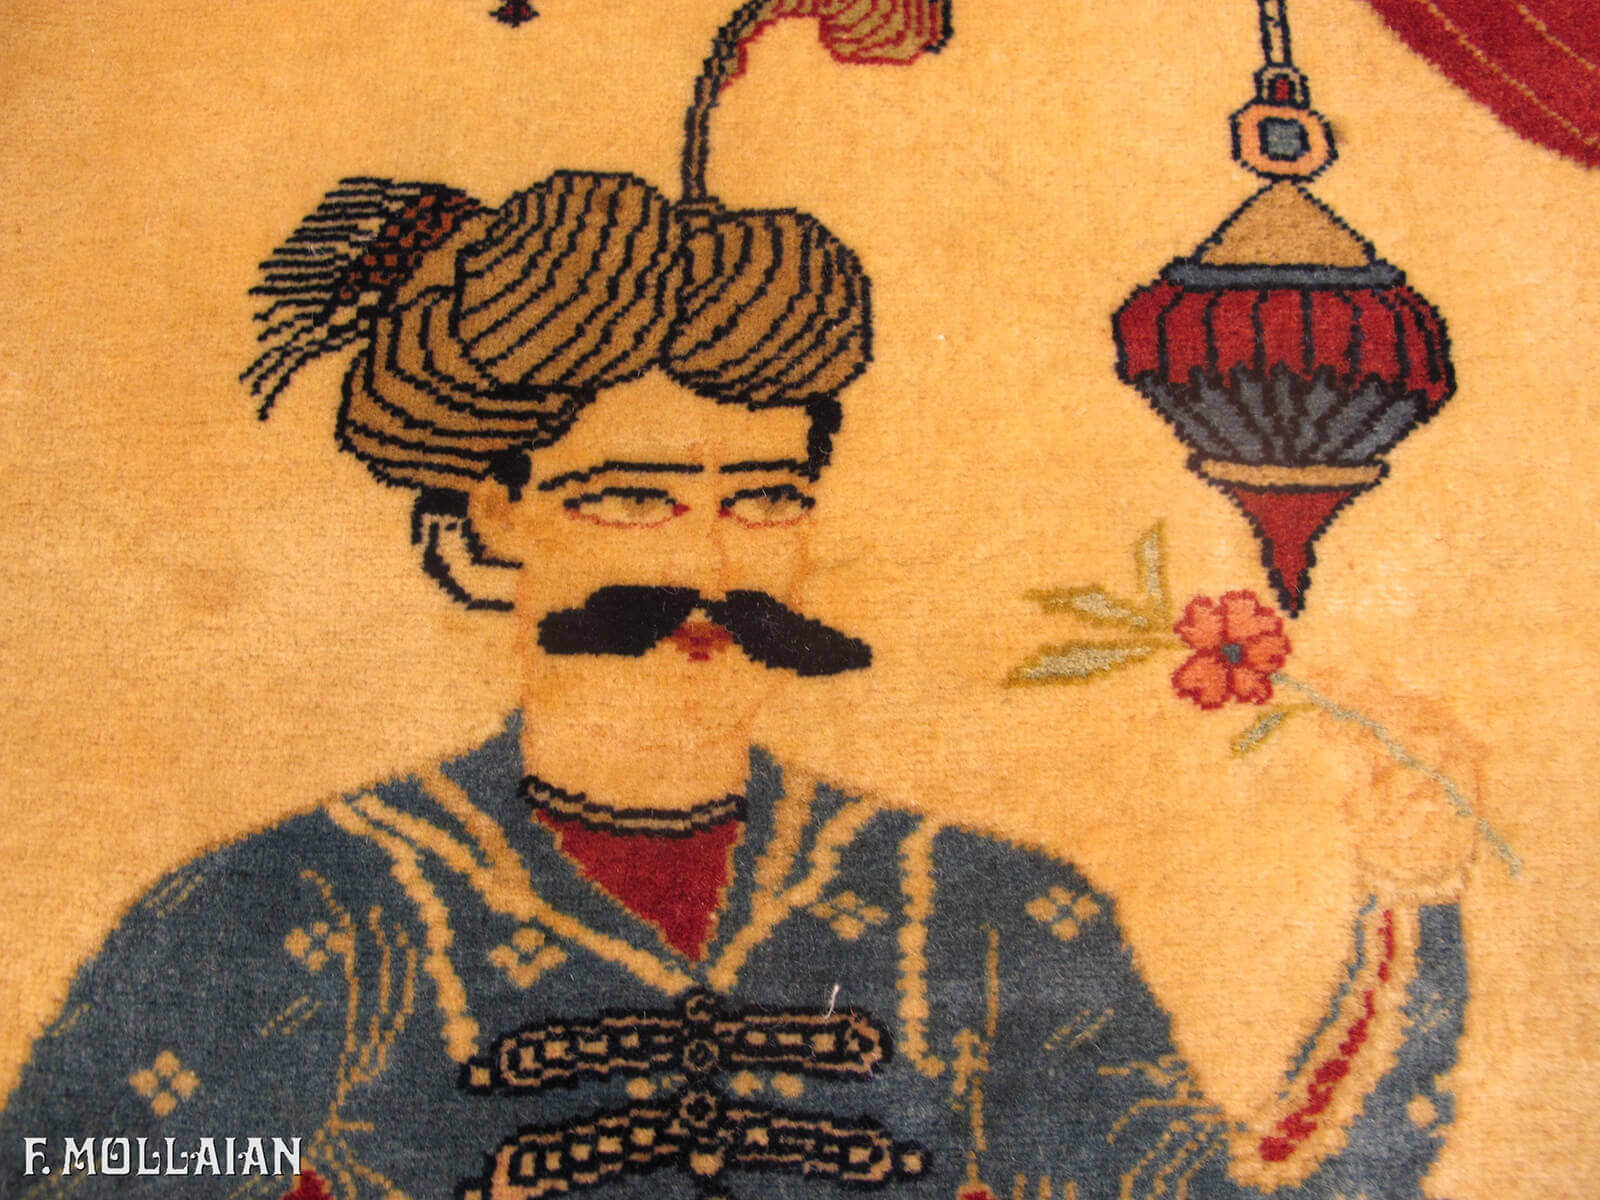 Tappeto Figurativo persiano Kashan antico “Shah Abbass” pittorico n°:37843154